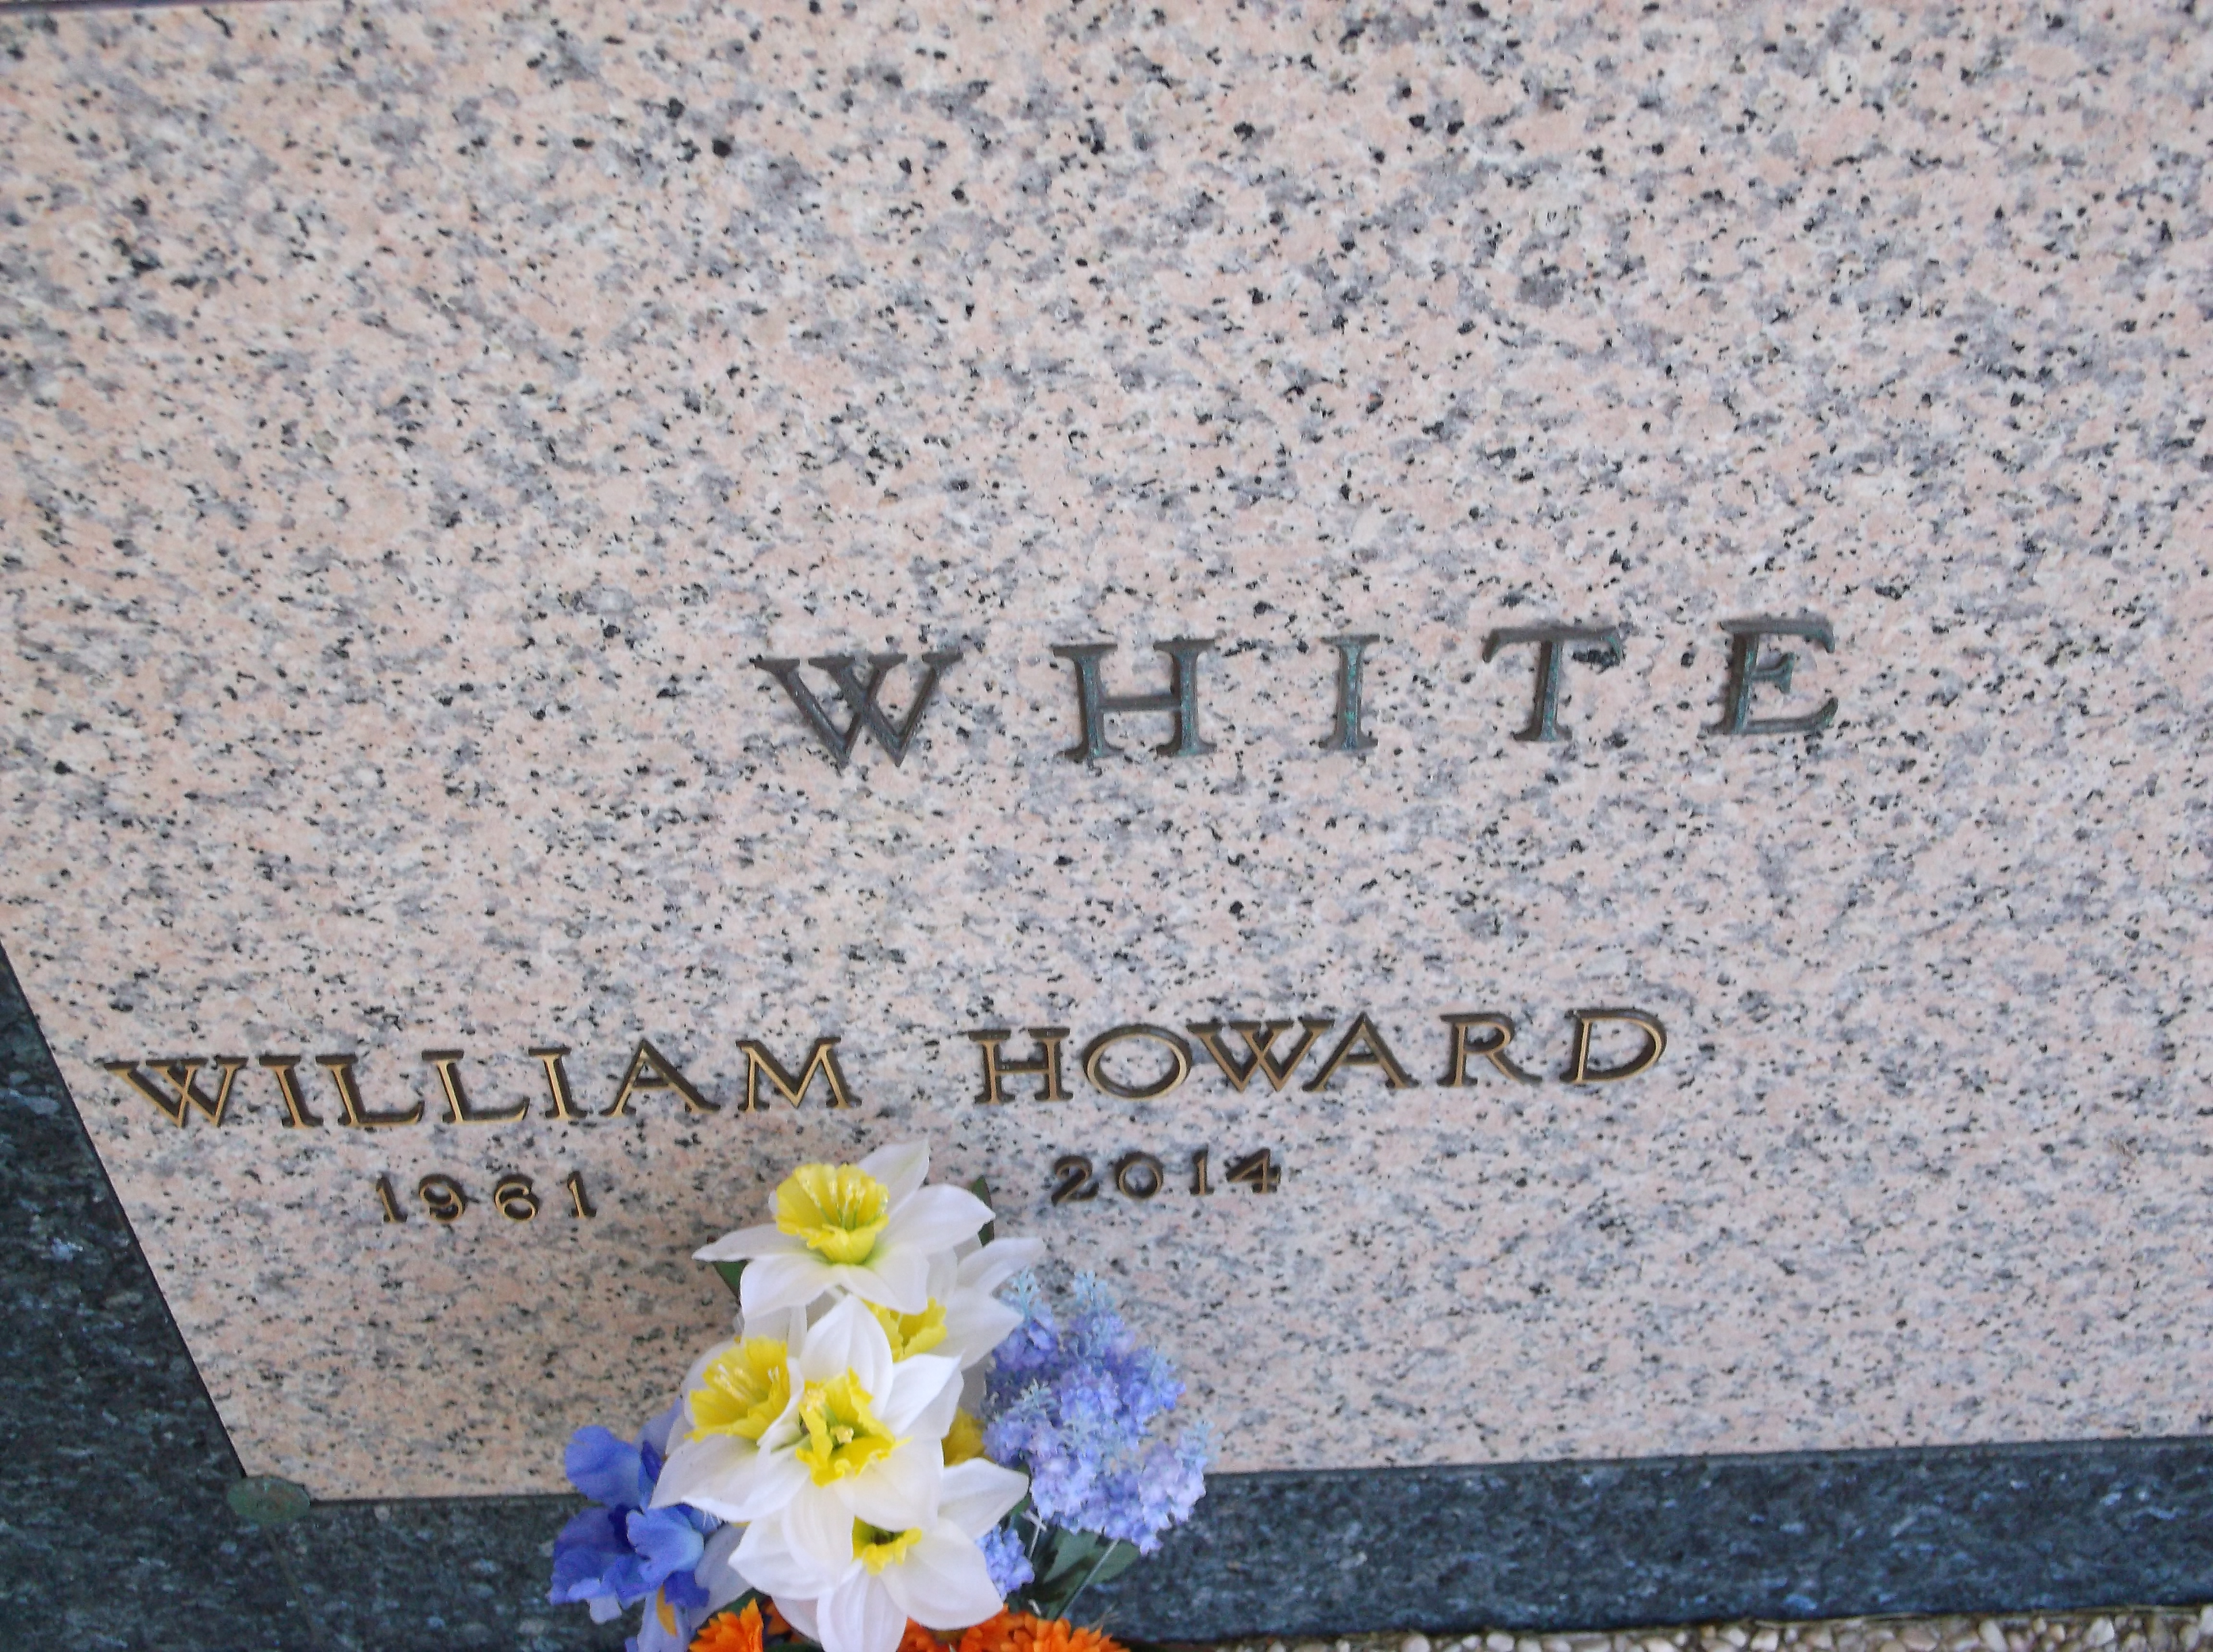 William Howard White